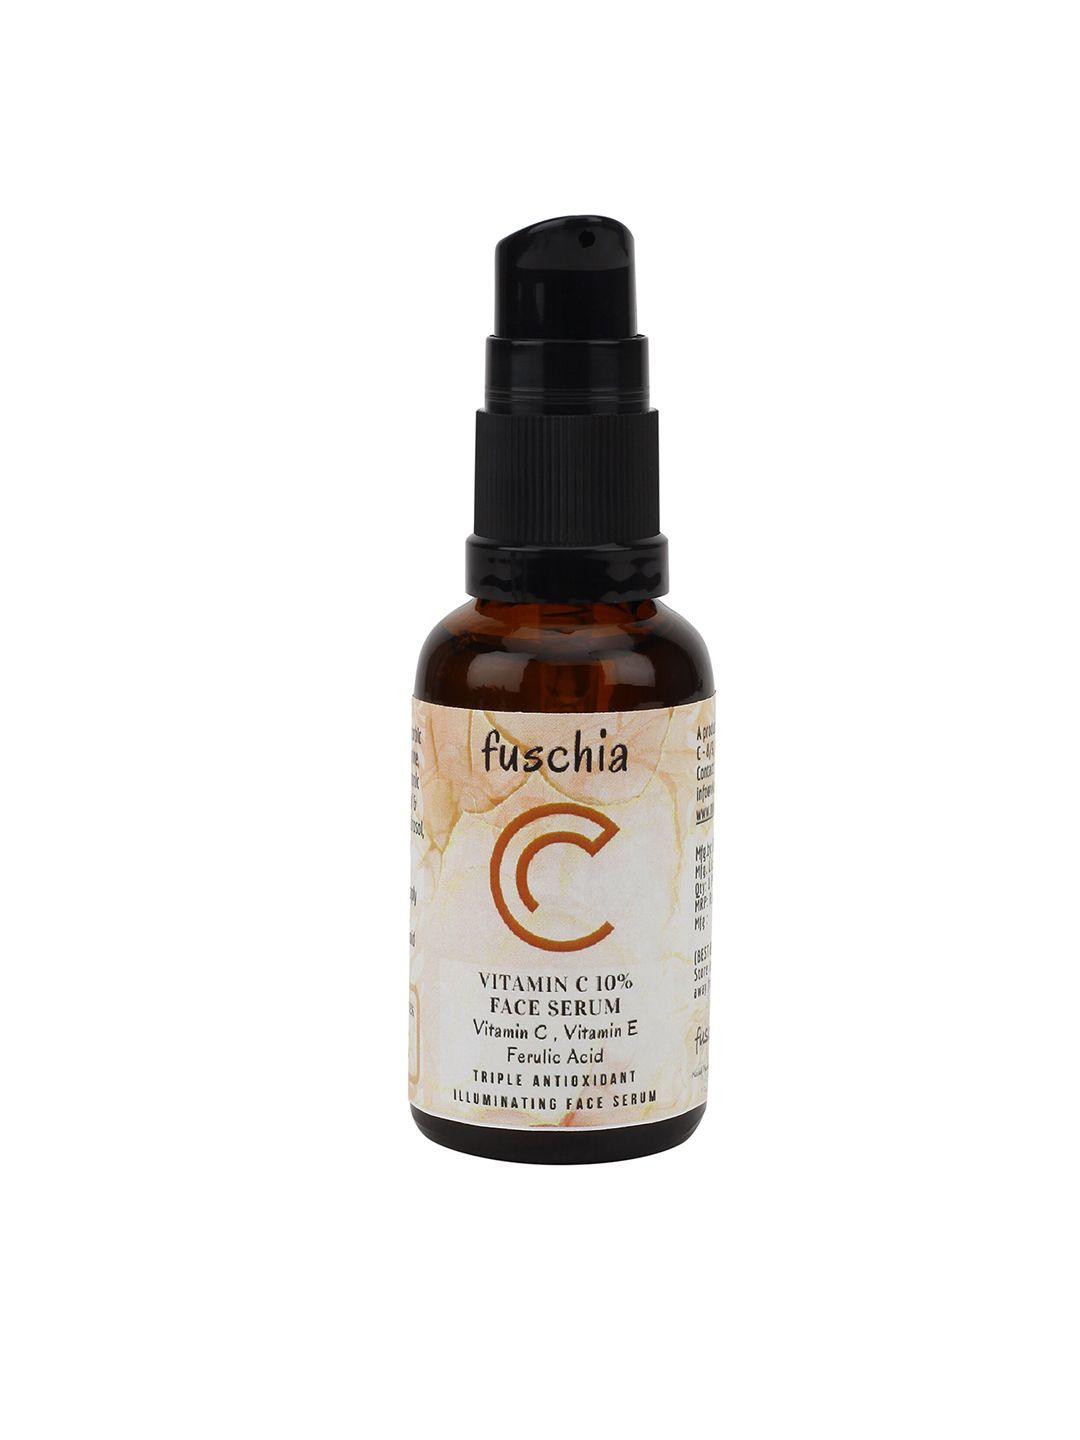 fuschia 10% vitamin c triple antioxidant face serum with vitamin c & ferulic acid - 30ml